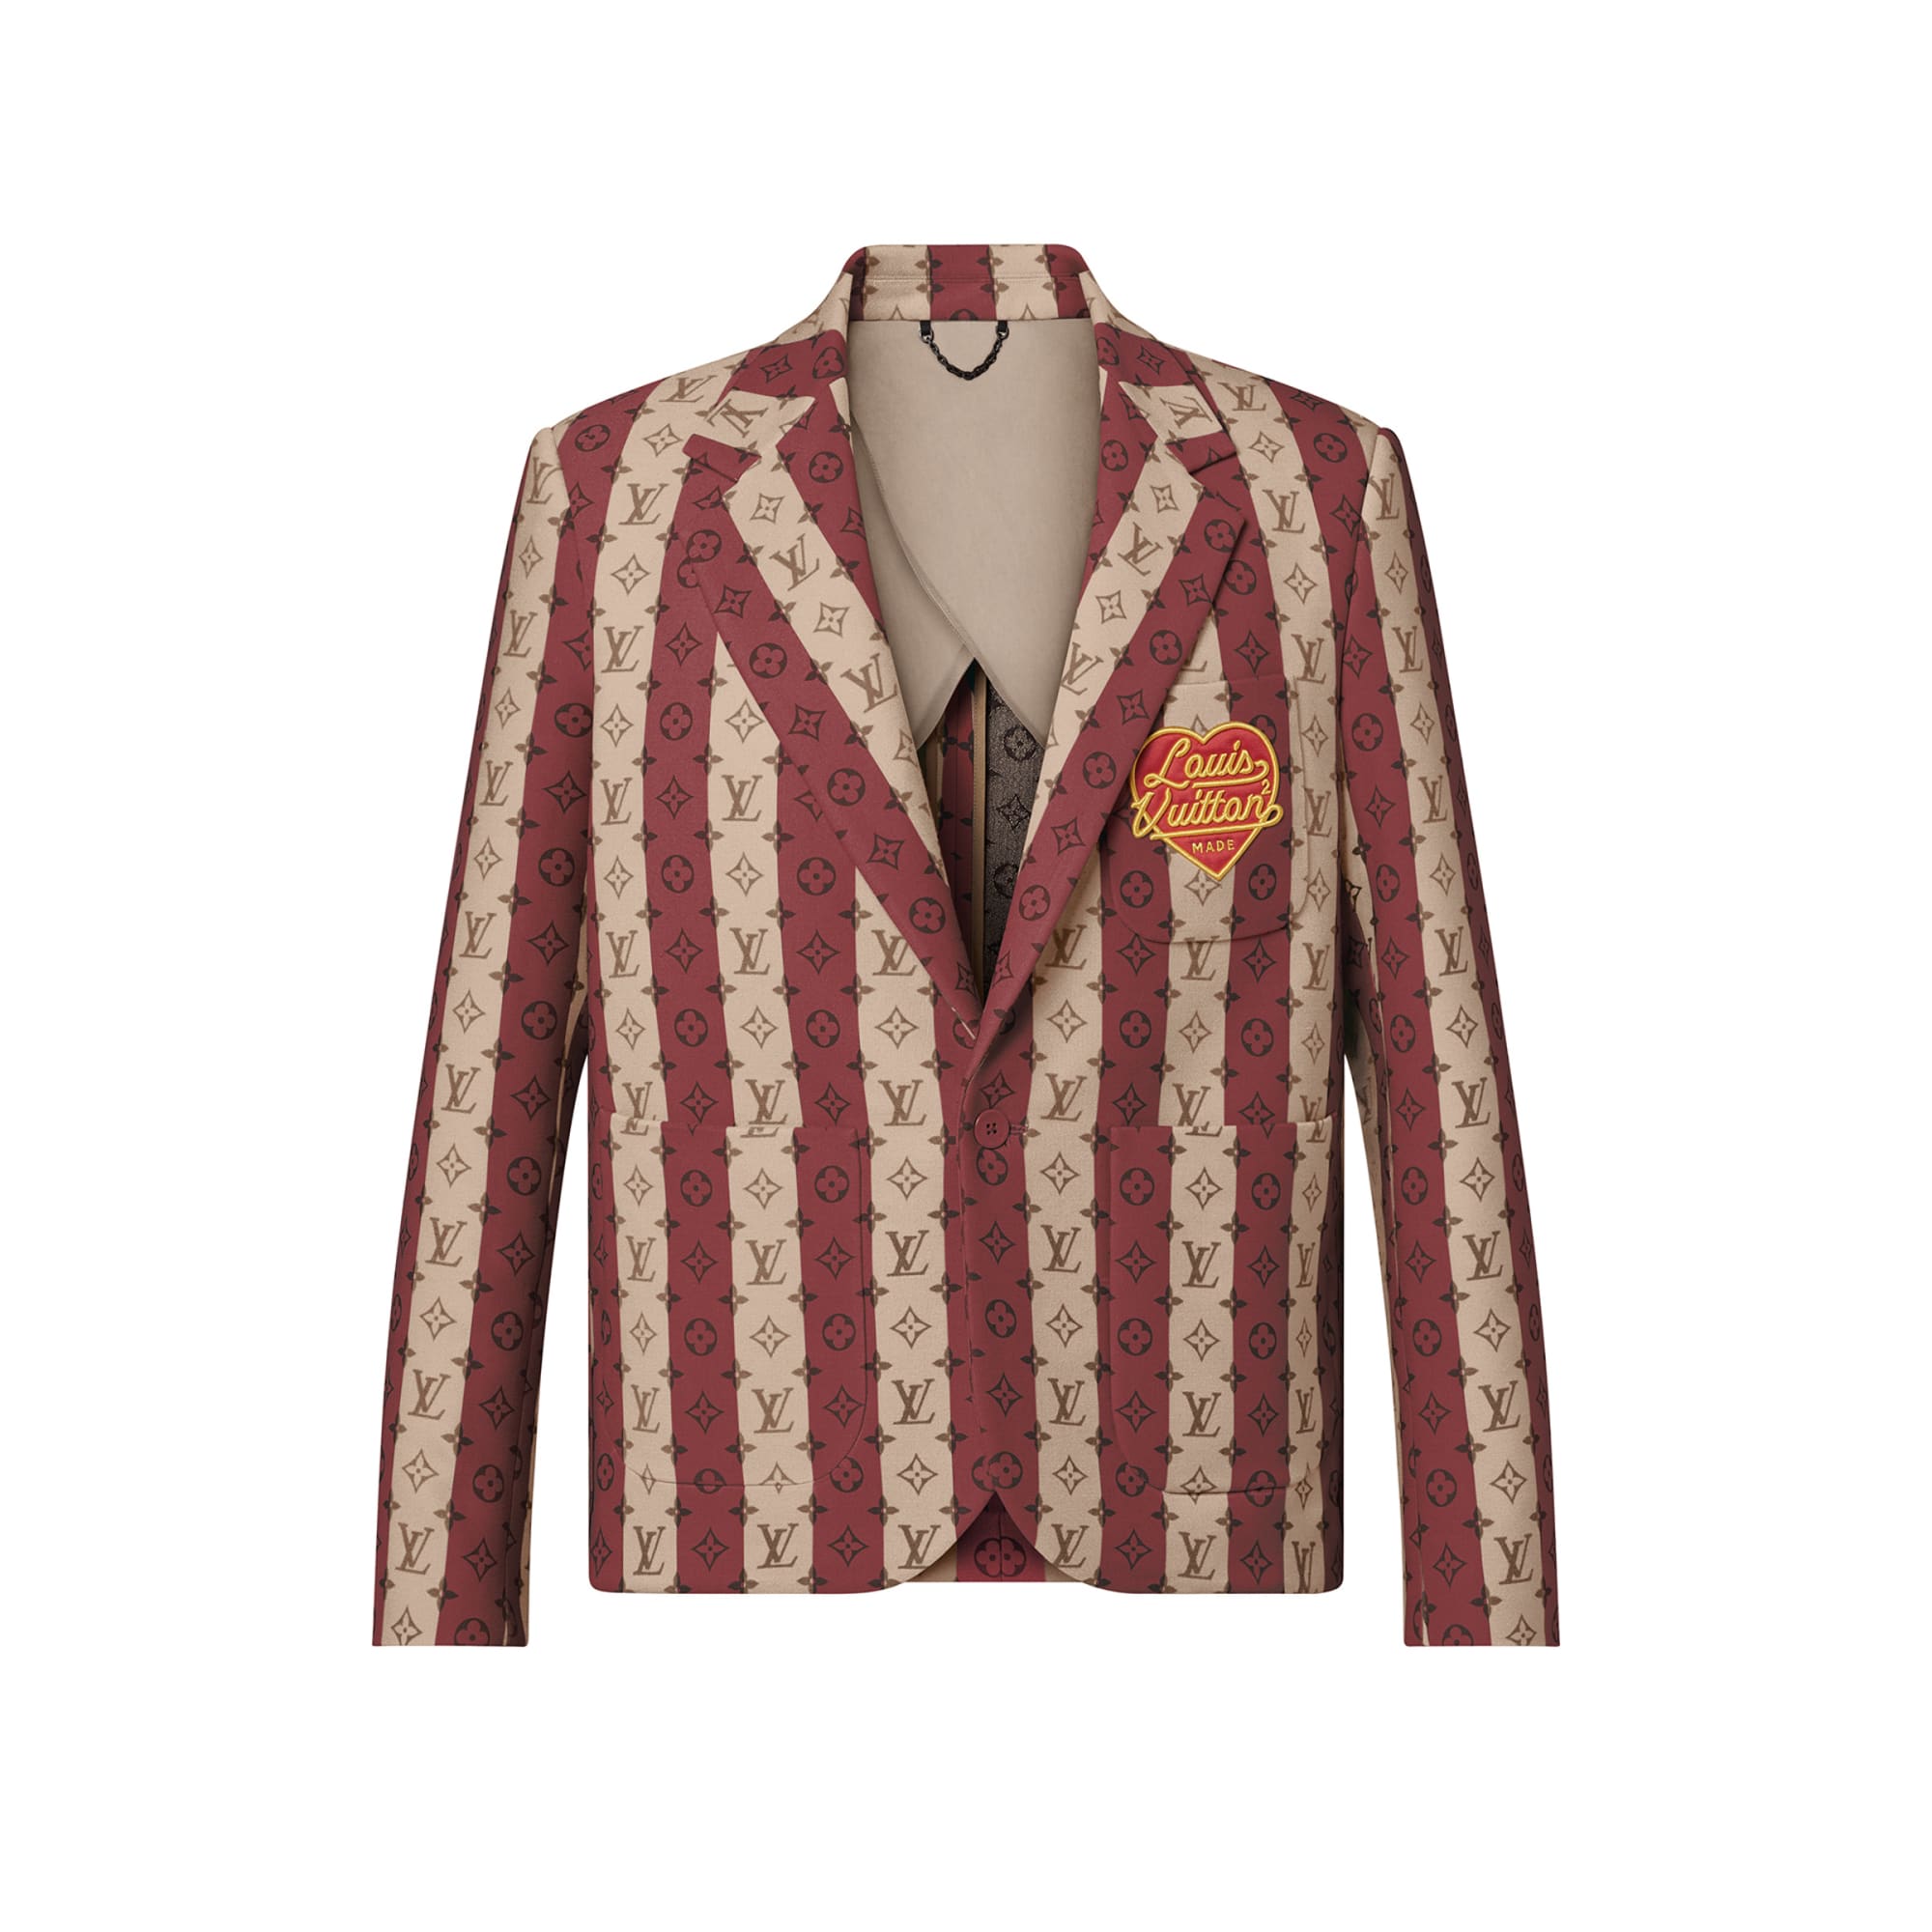 LOUIS VUITTON x NIGO® 2021 Japan Limited Edition -Japan limited item jacket (482,900 yen including tax)